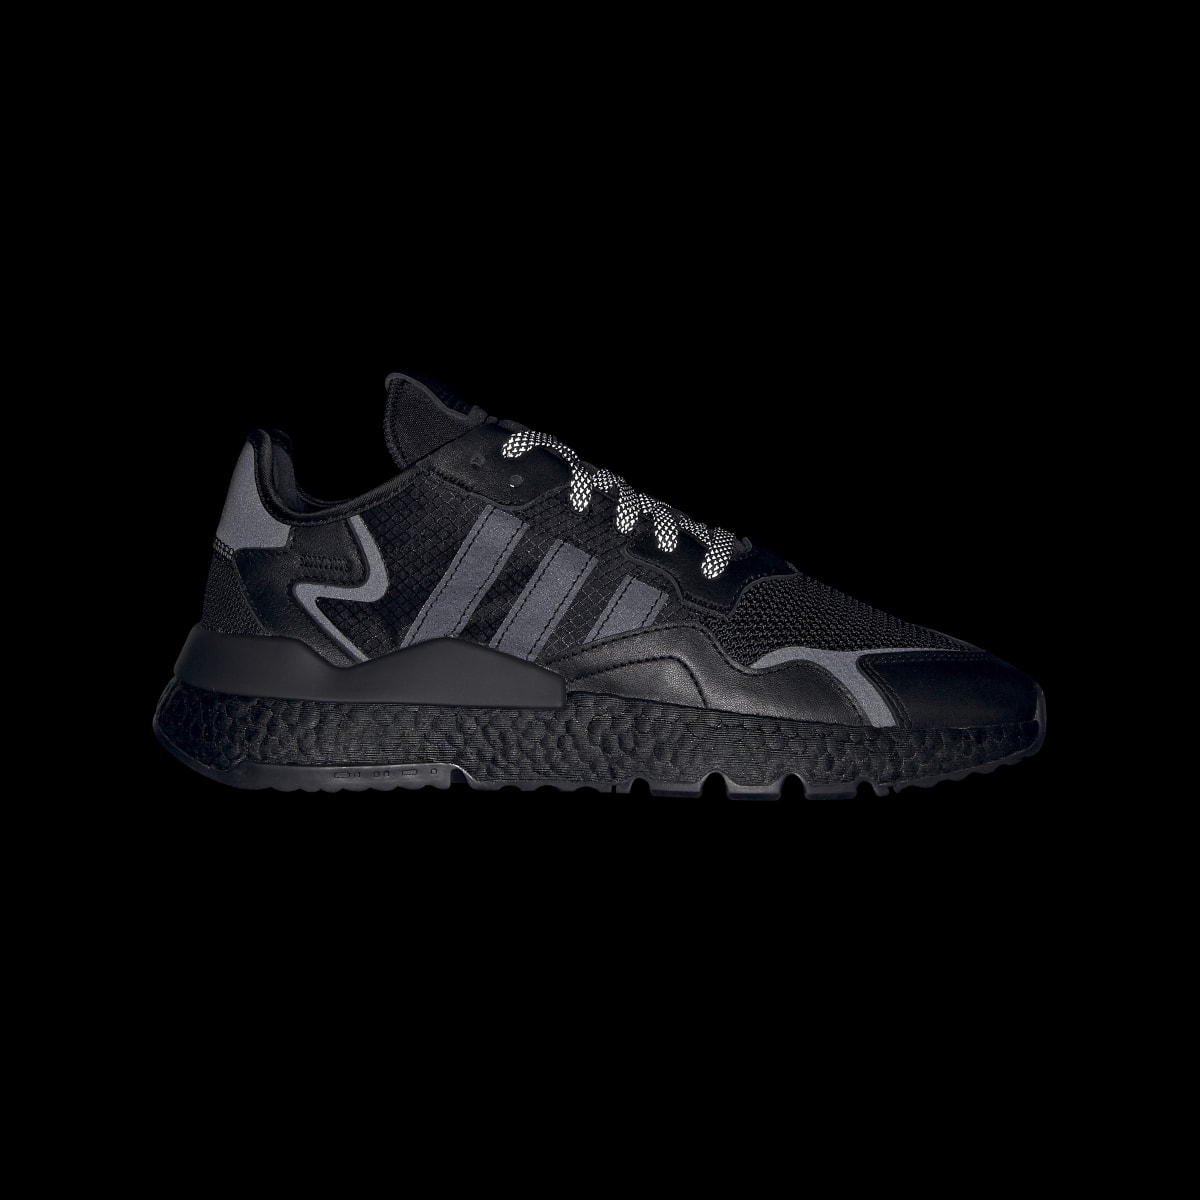 Adidas Nite Jogger Shoes. 6